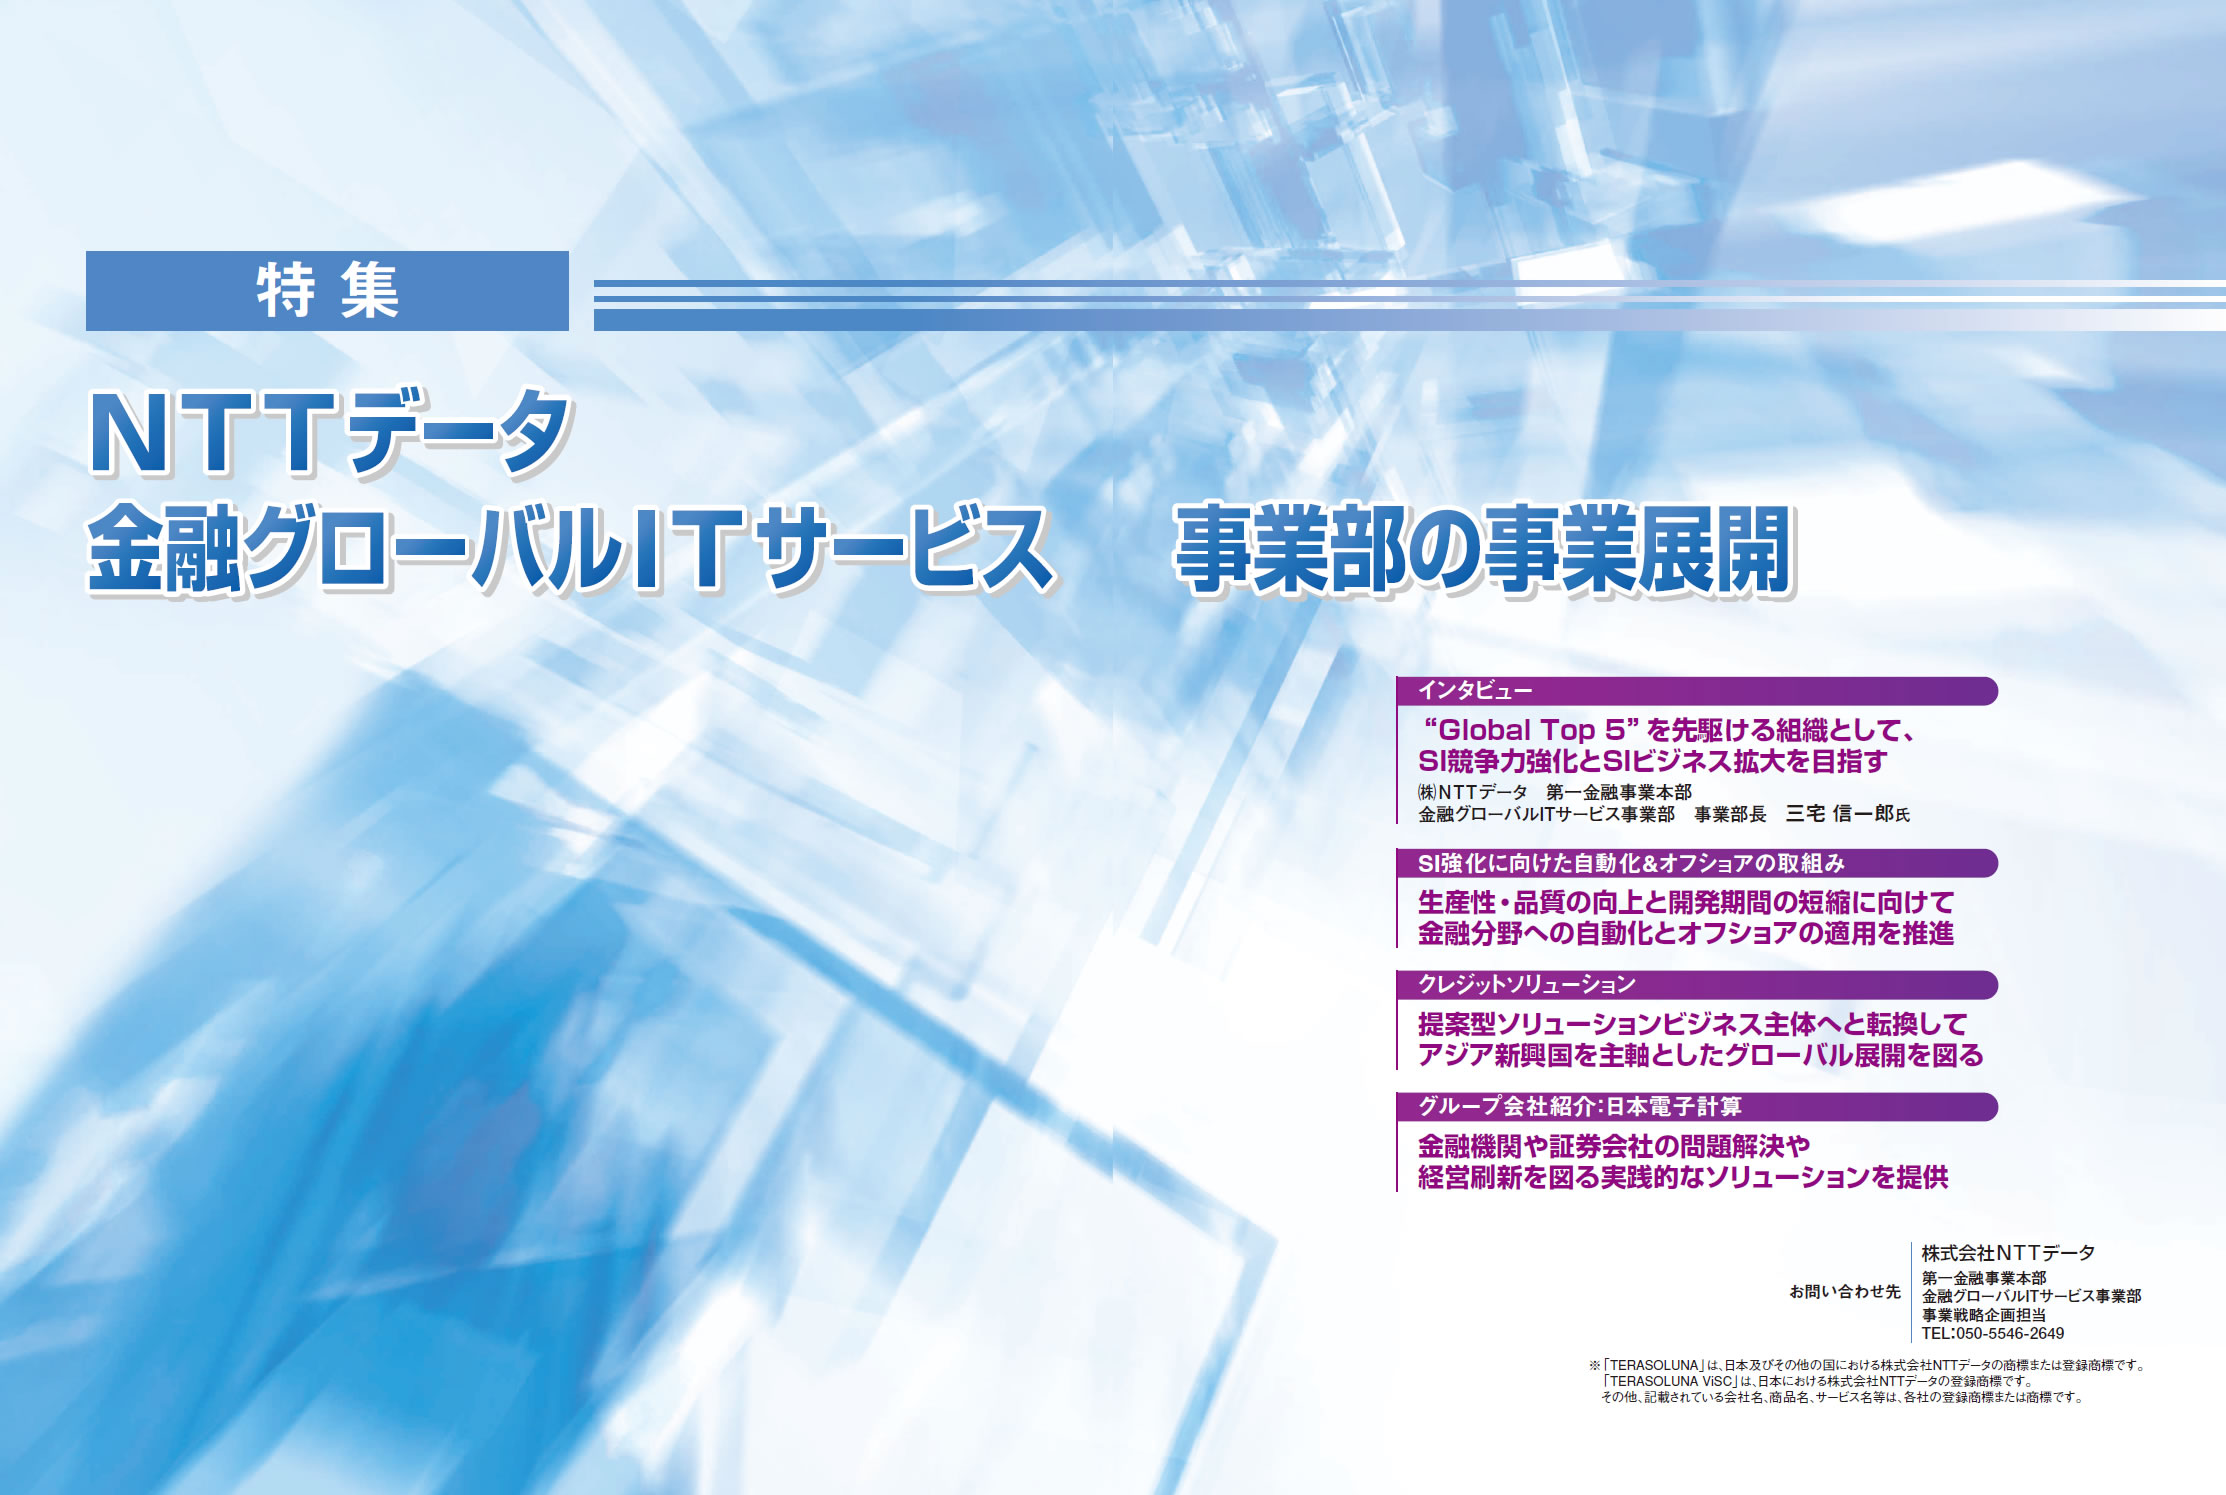 NTTデータ 金融グローバルITサービス事業部の事業展開